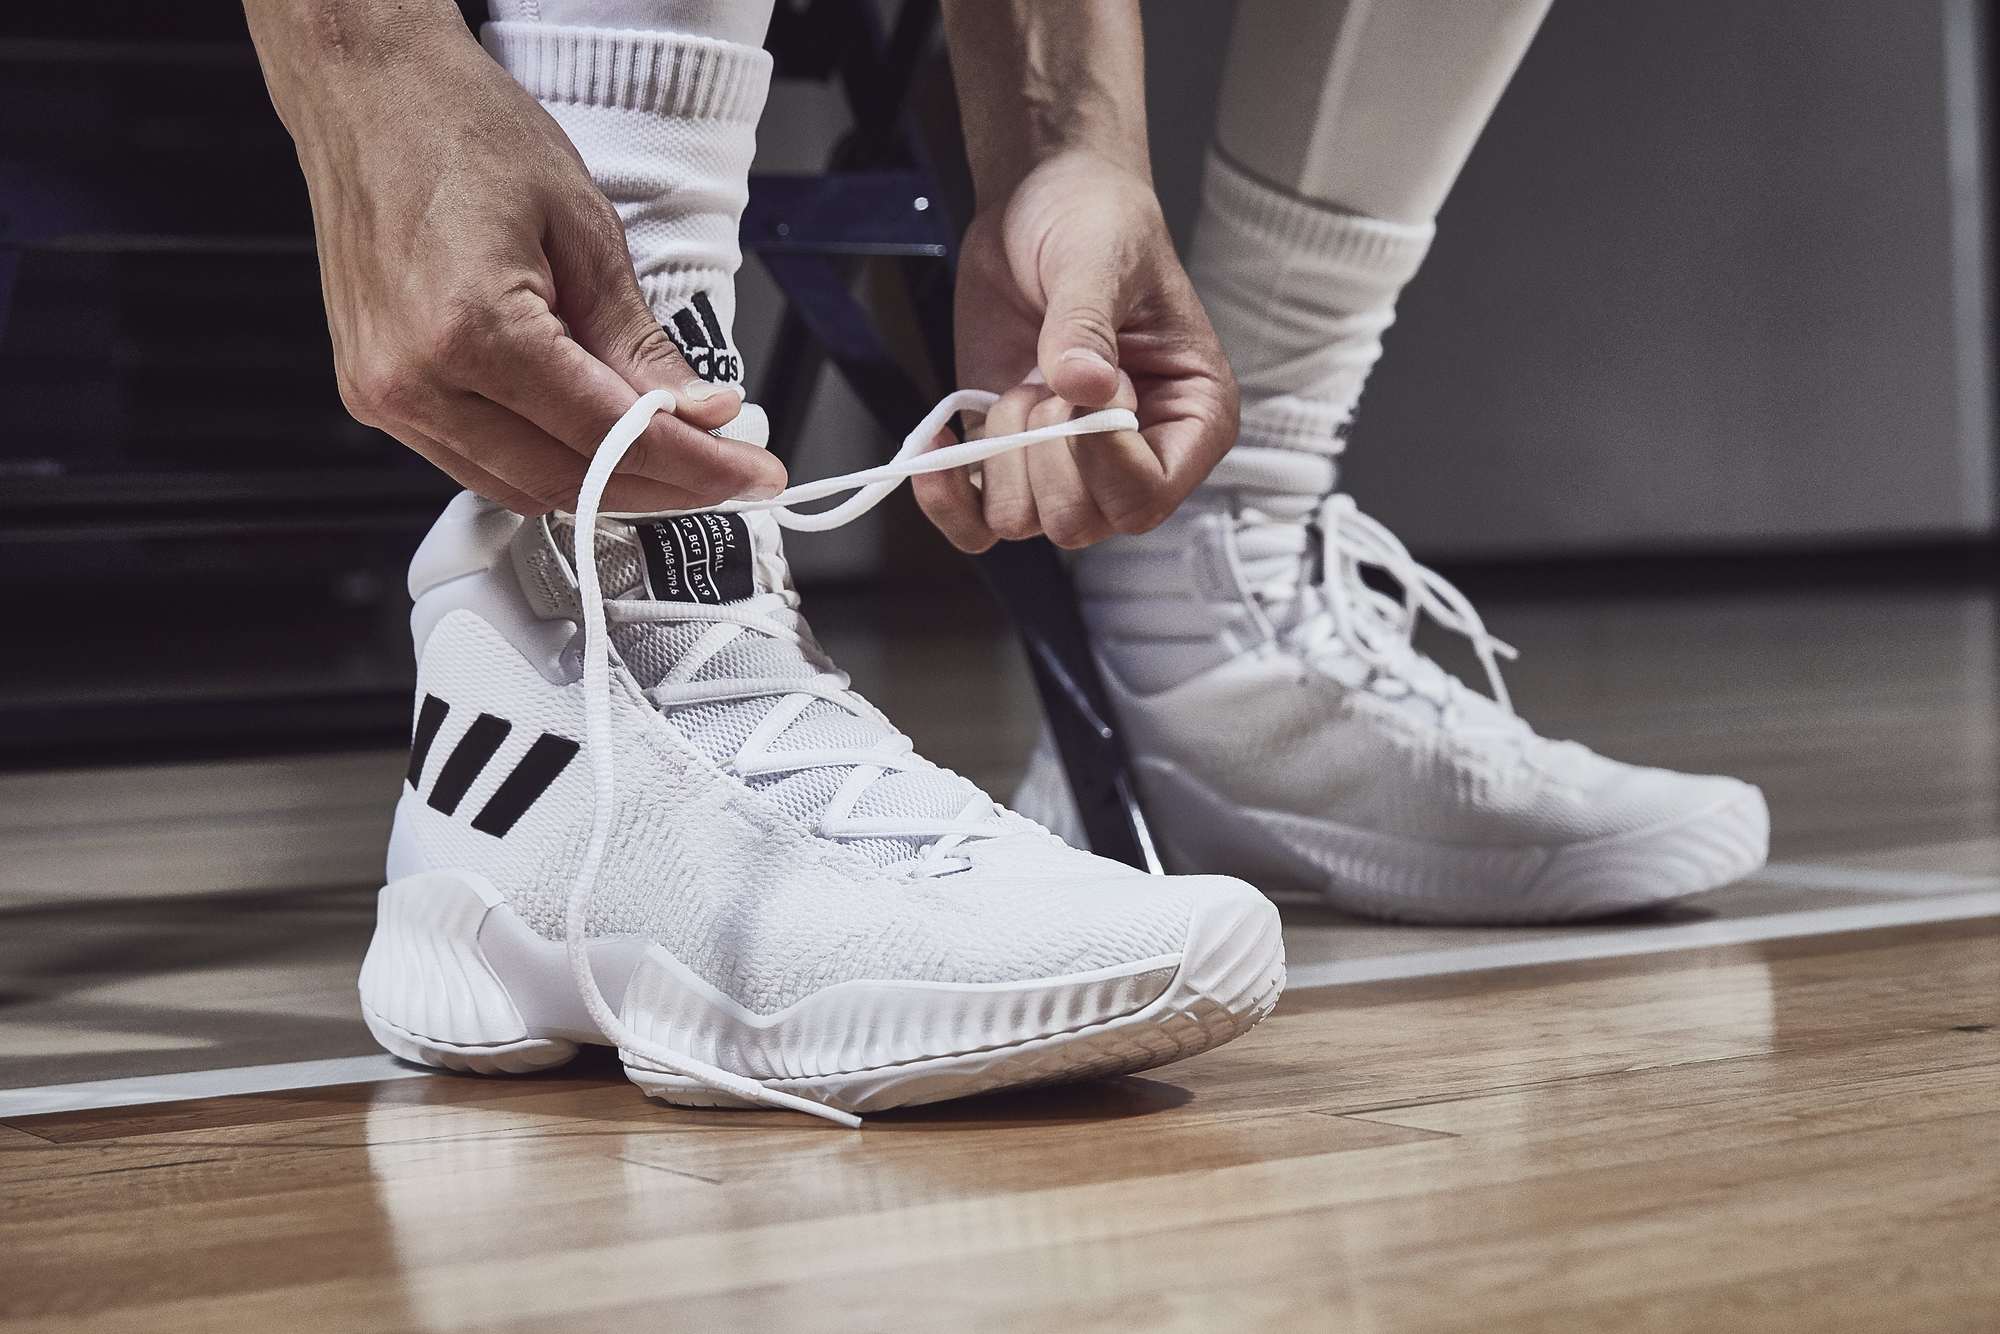 adidas pro bounce 2018 white